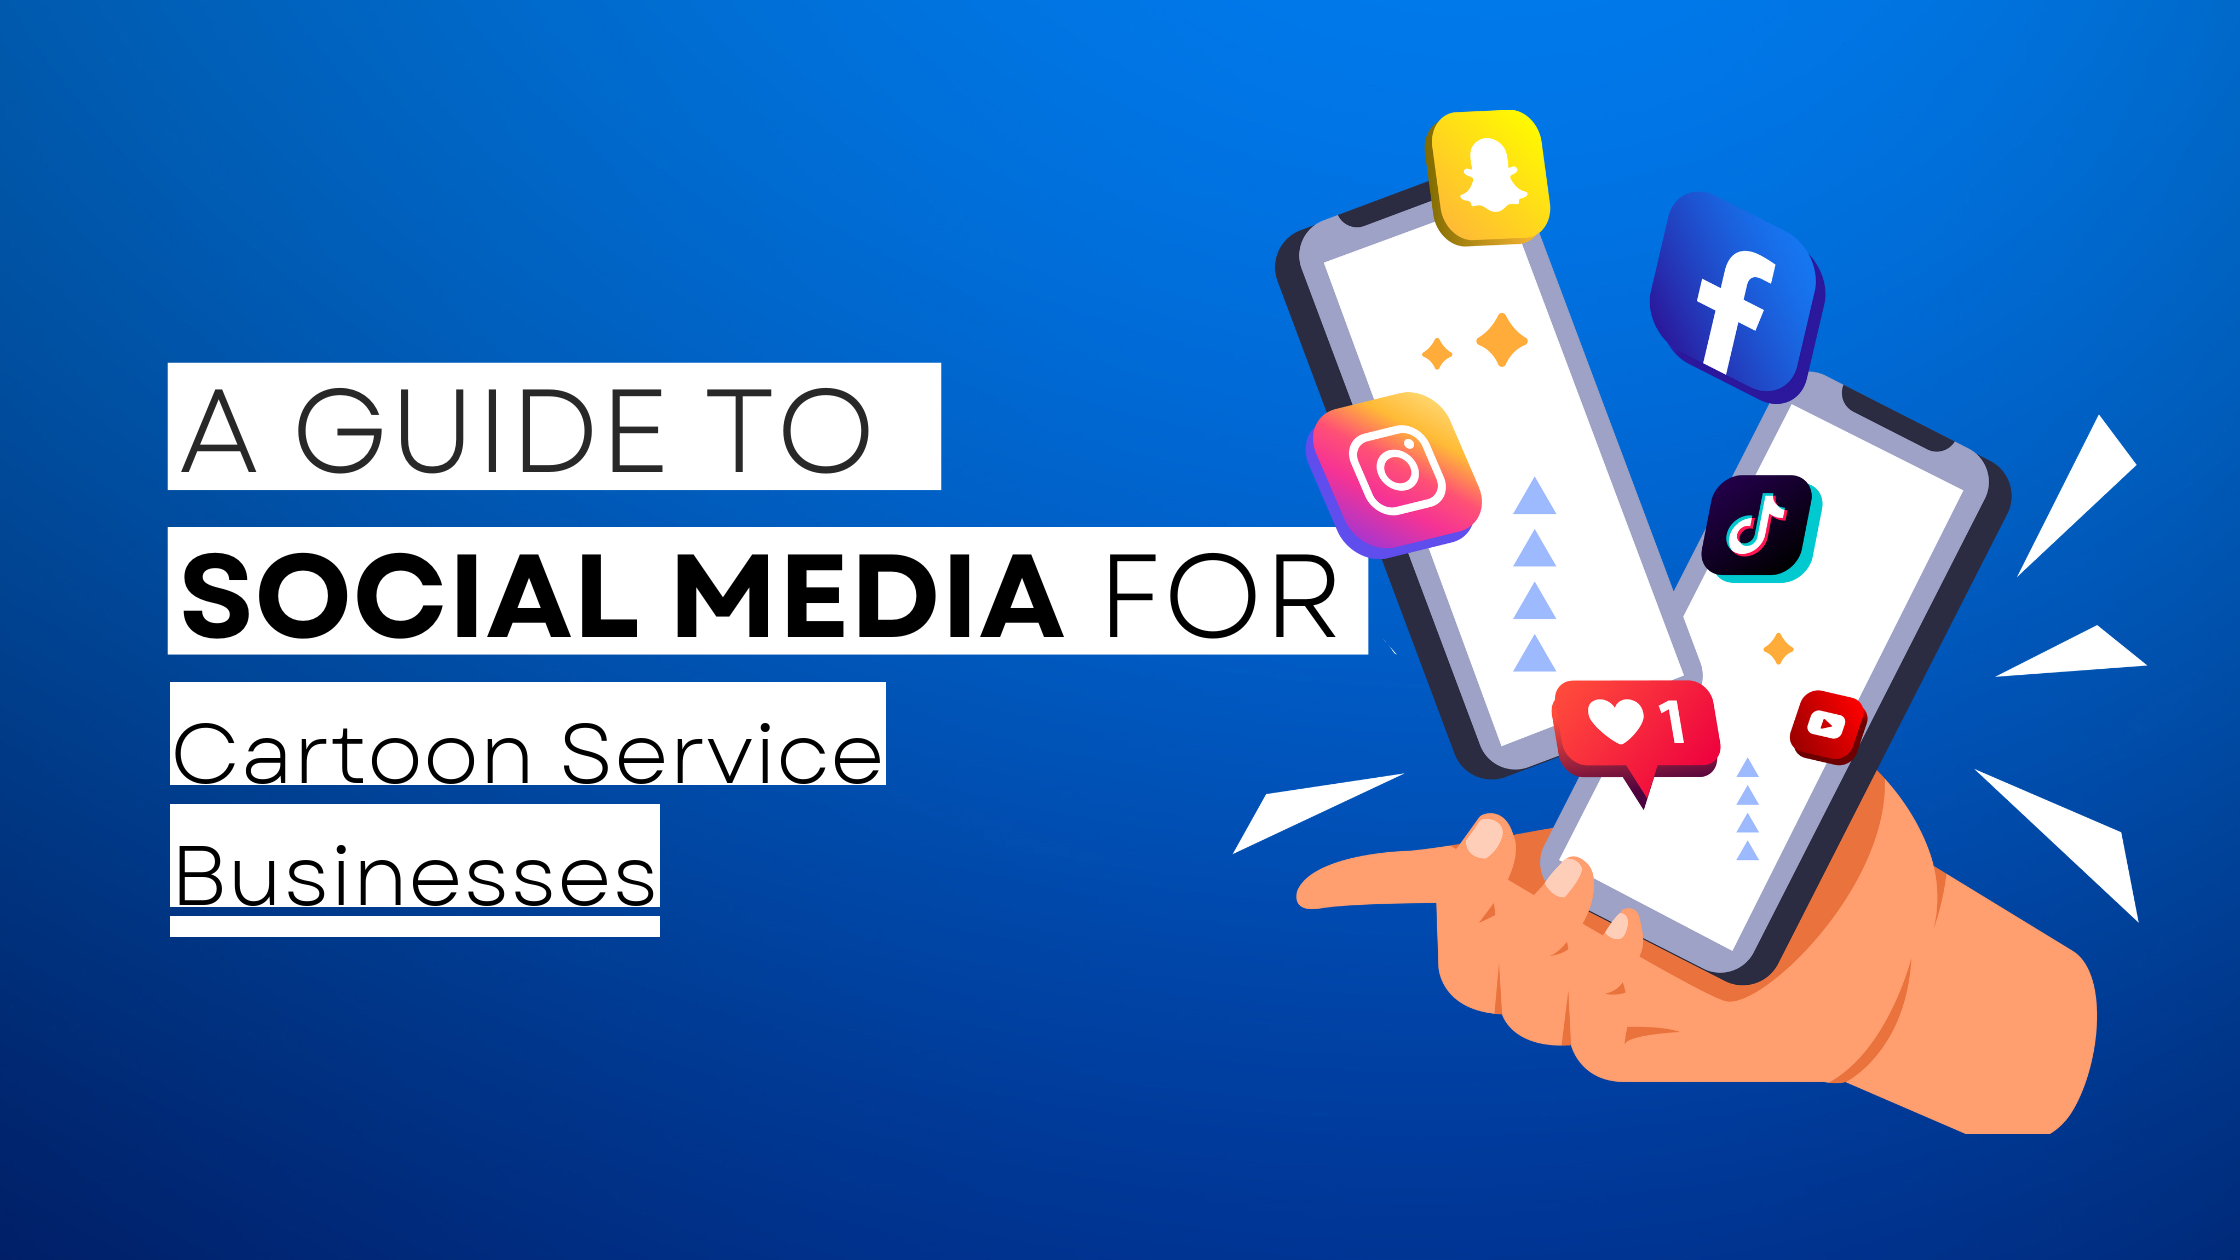 How to start Cartoon Service on social media